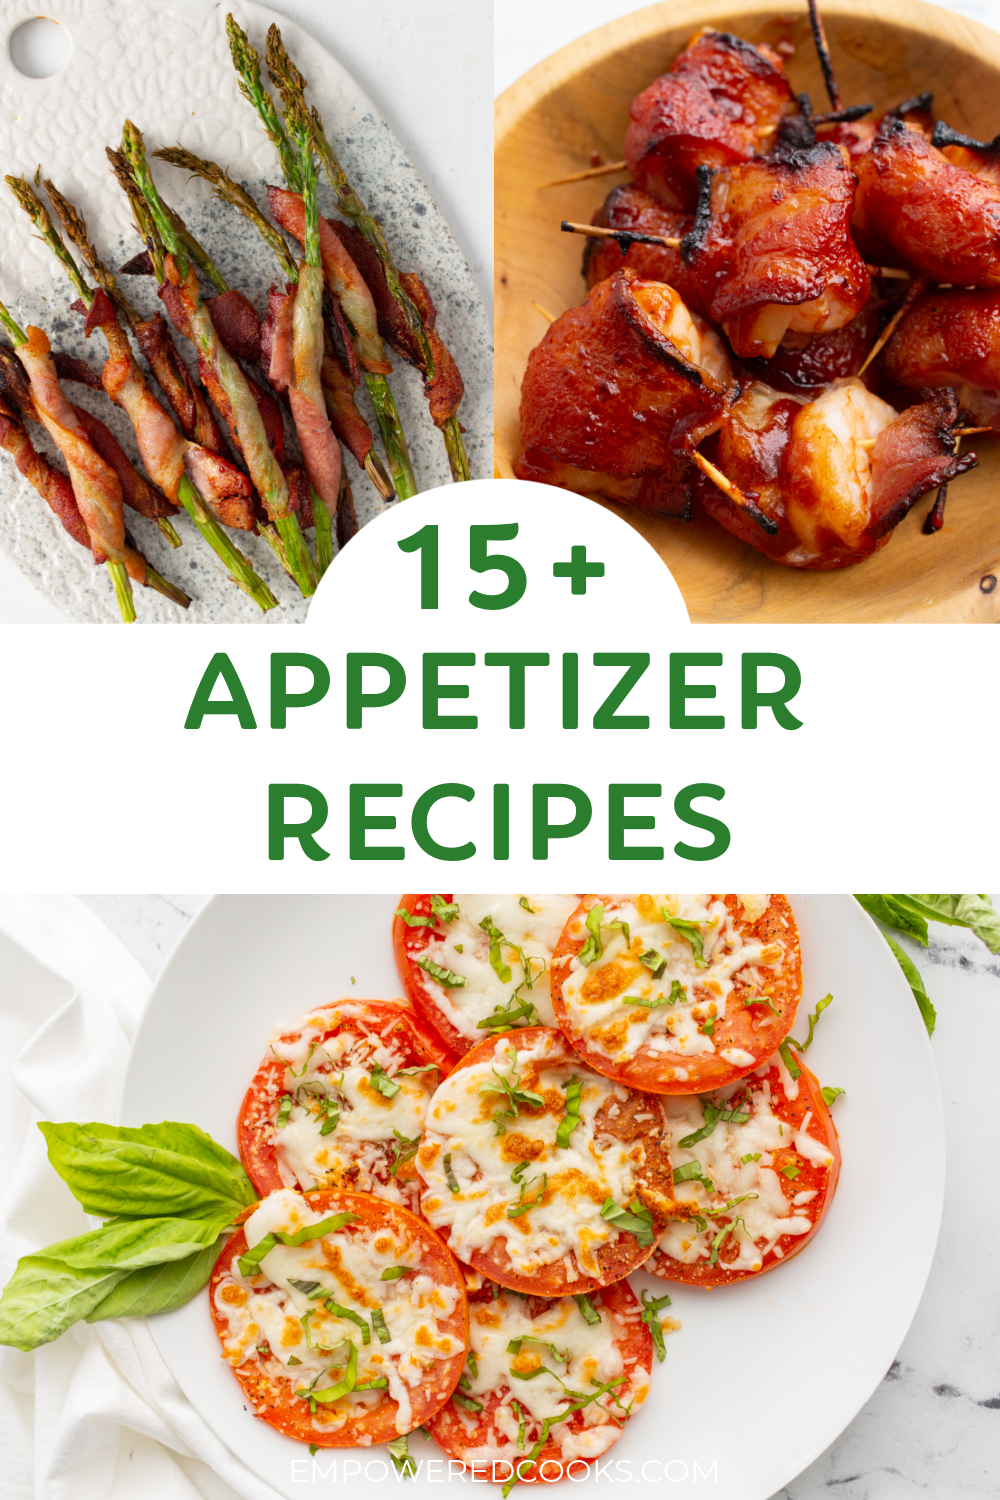 15+ appetizer recipes